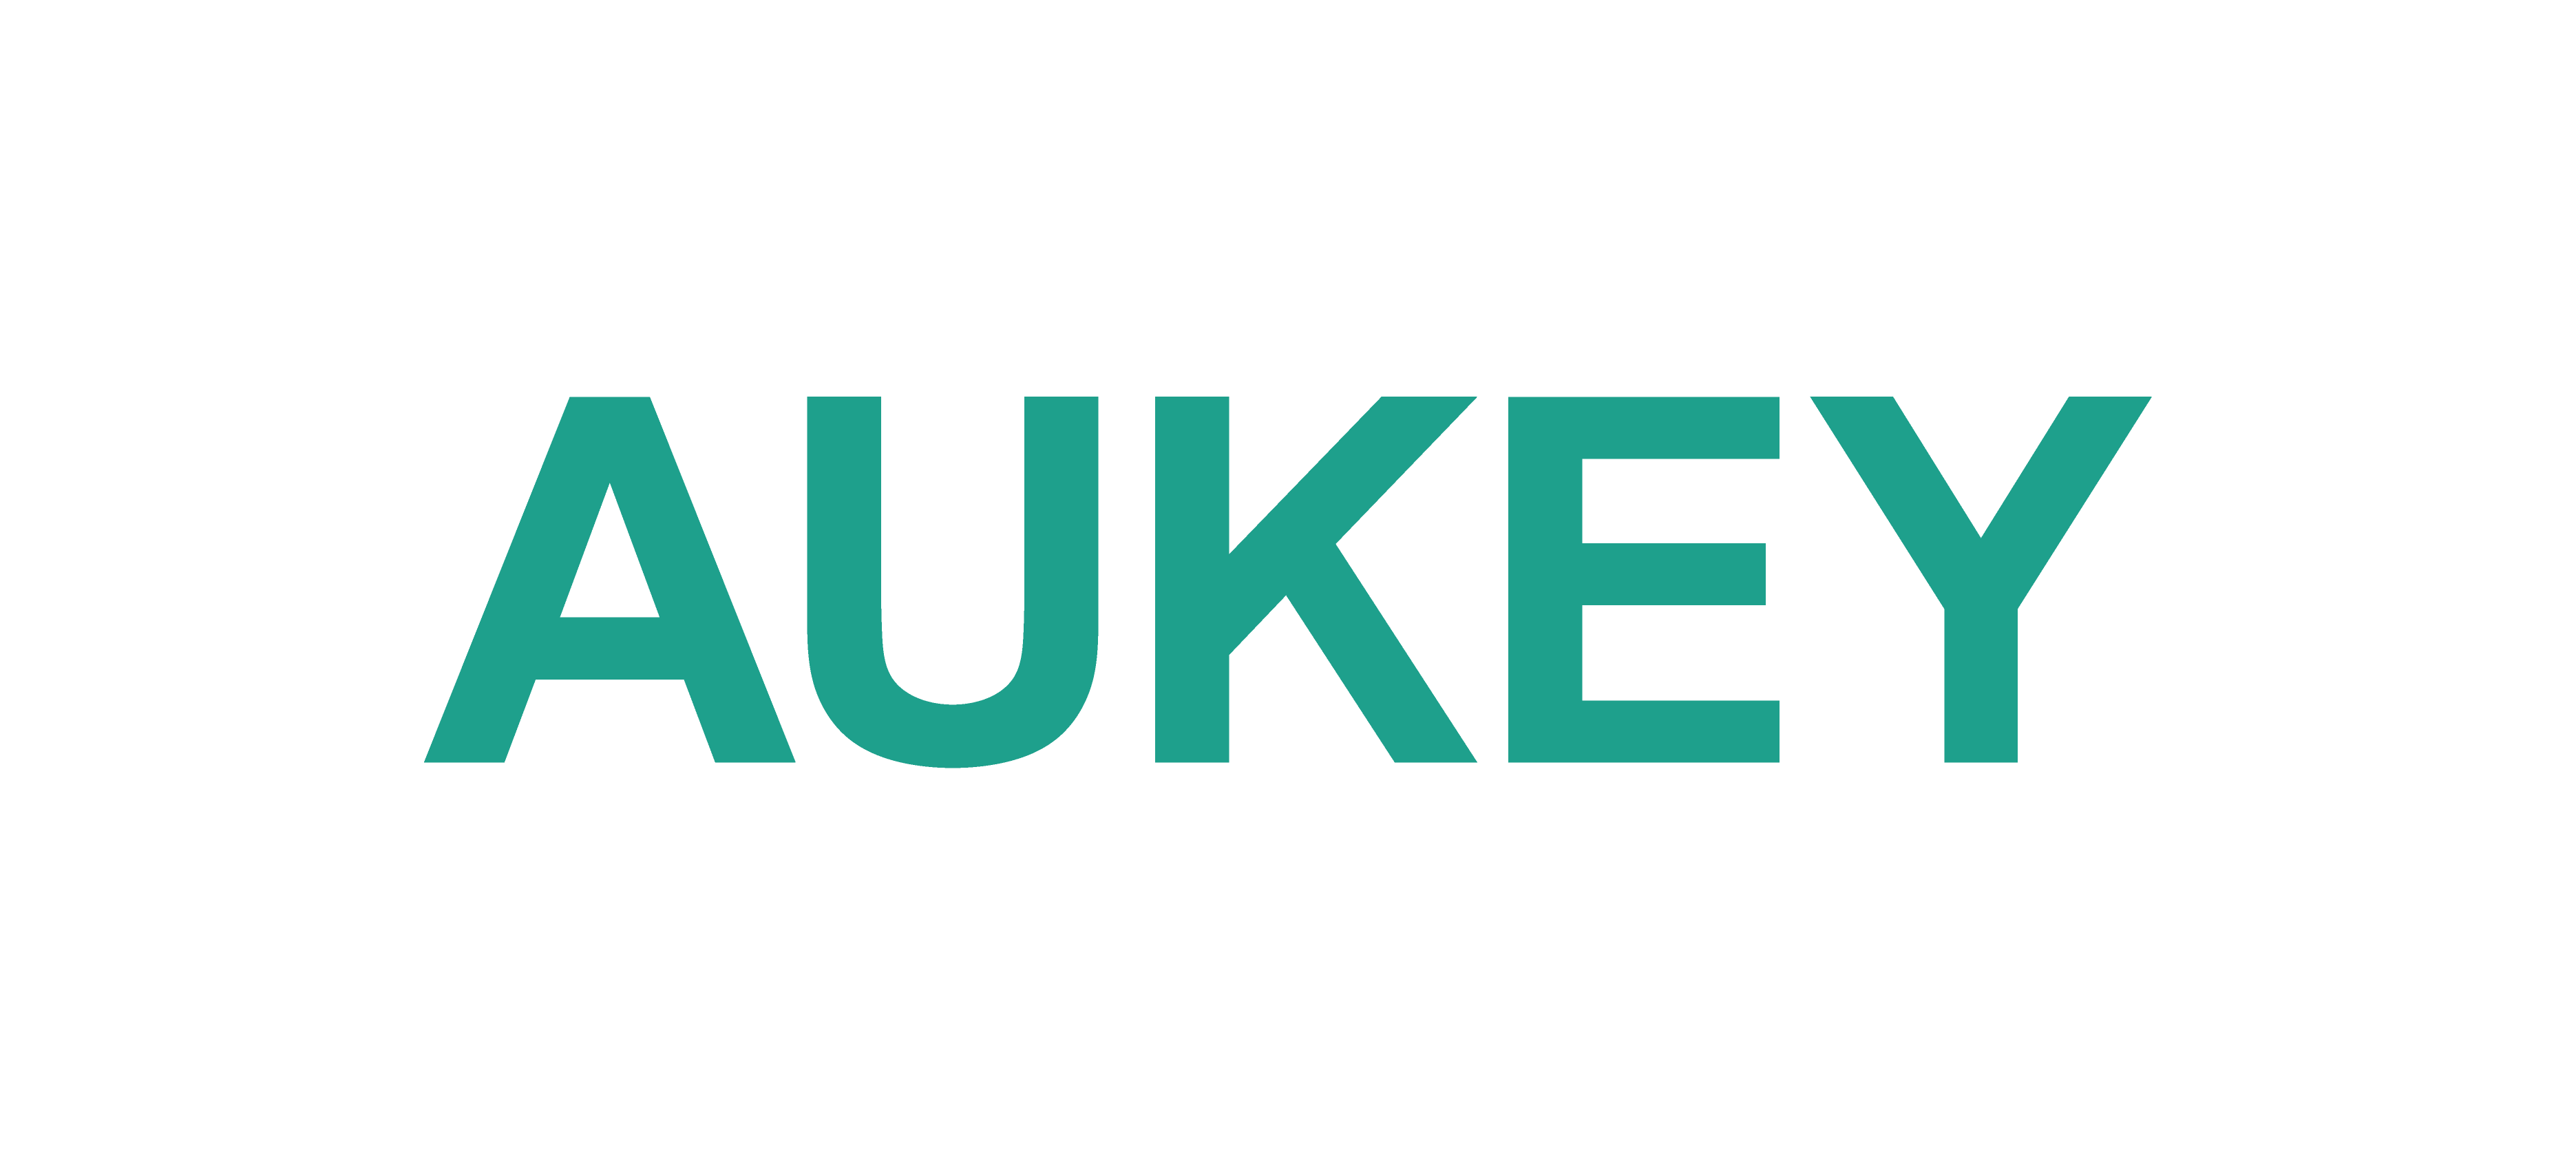 AUKEY Logo.png